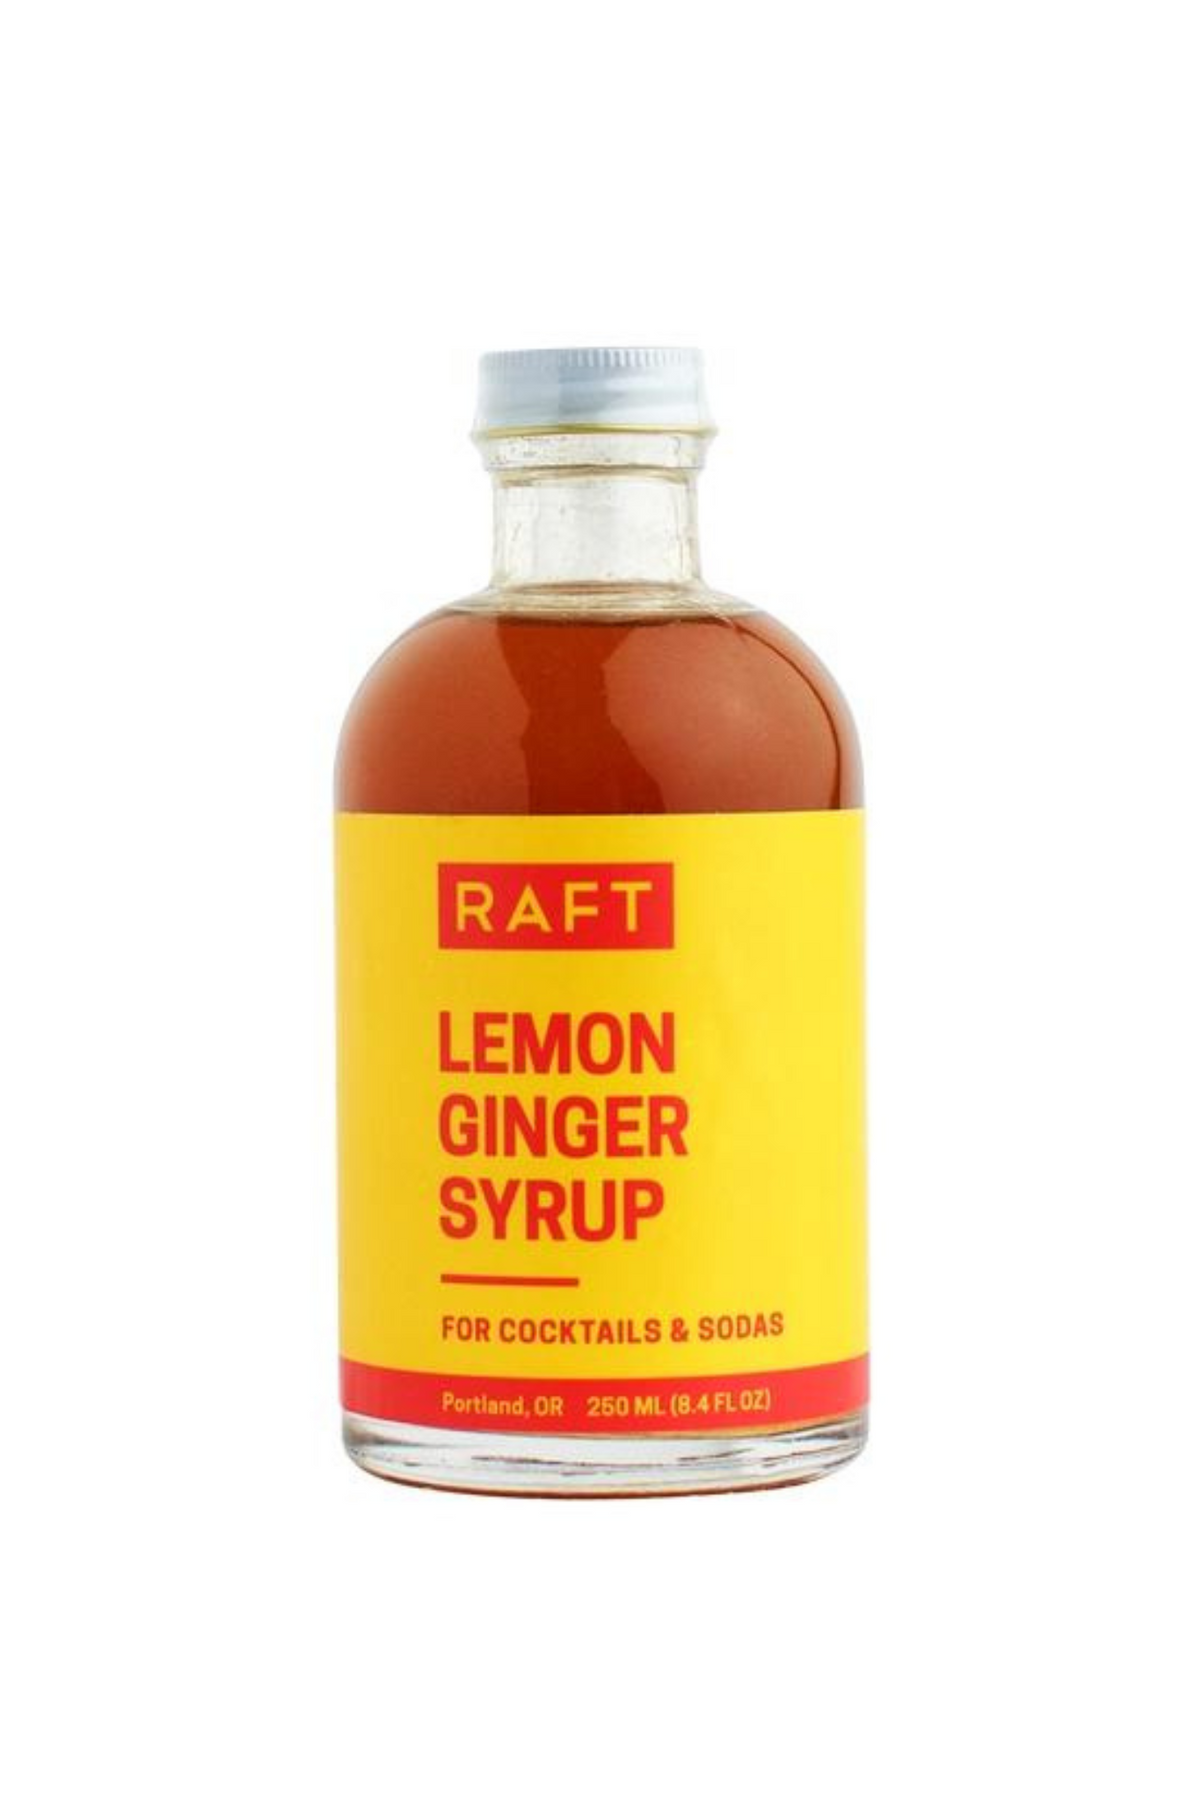 RAFT Lemon Ginger Syrup